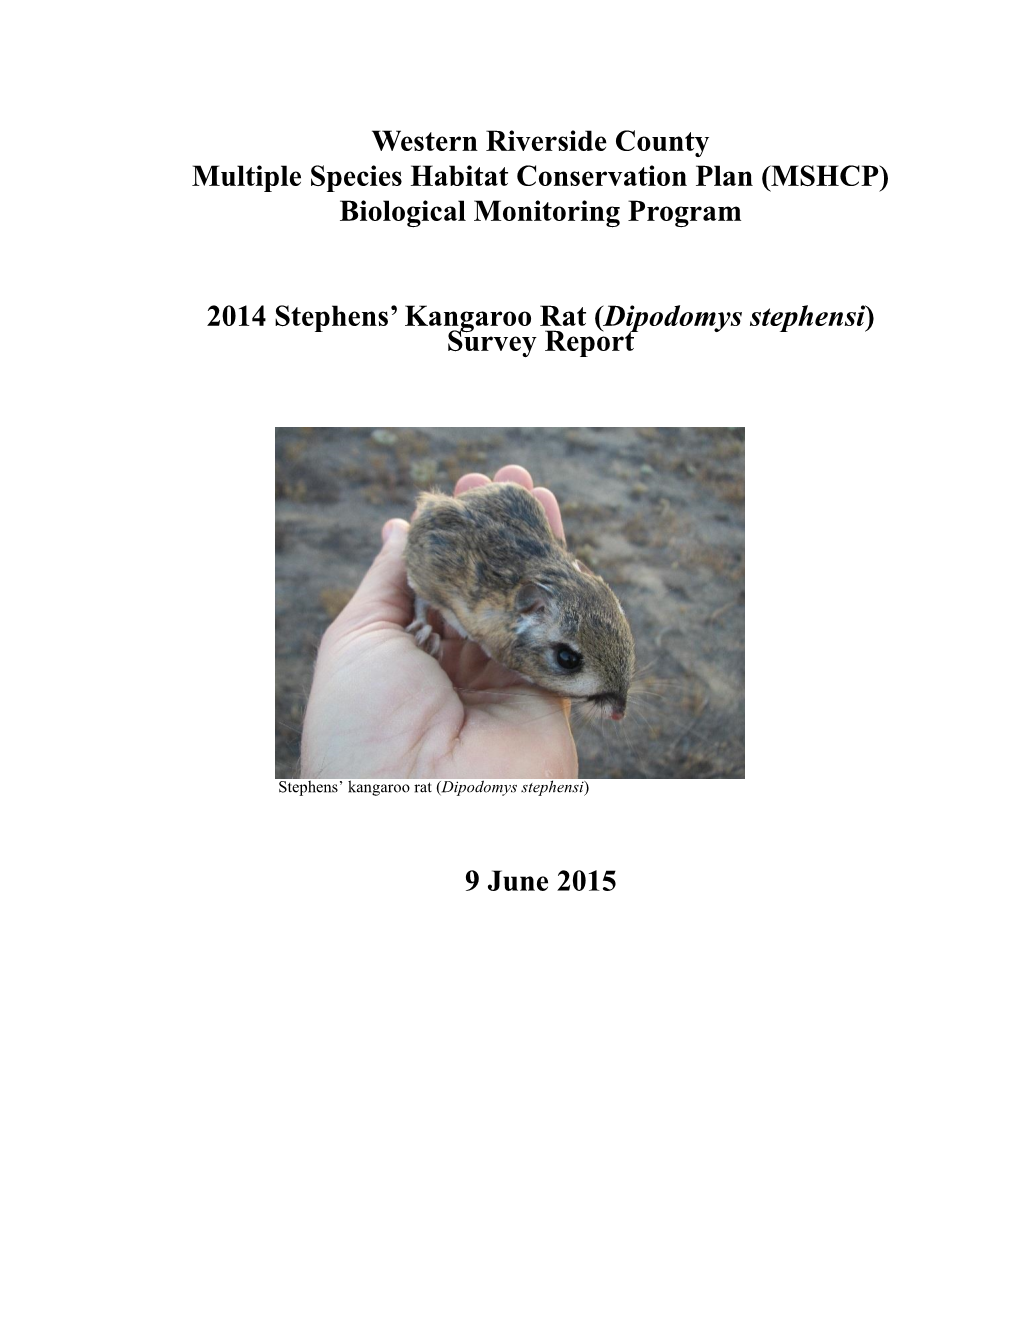 Western Riverside County Multiple Species Habitat Conservation Plan (MSHCP) Biological Monitoring Program